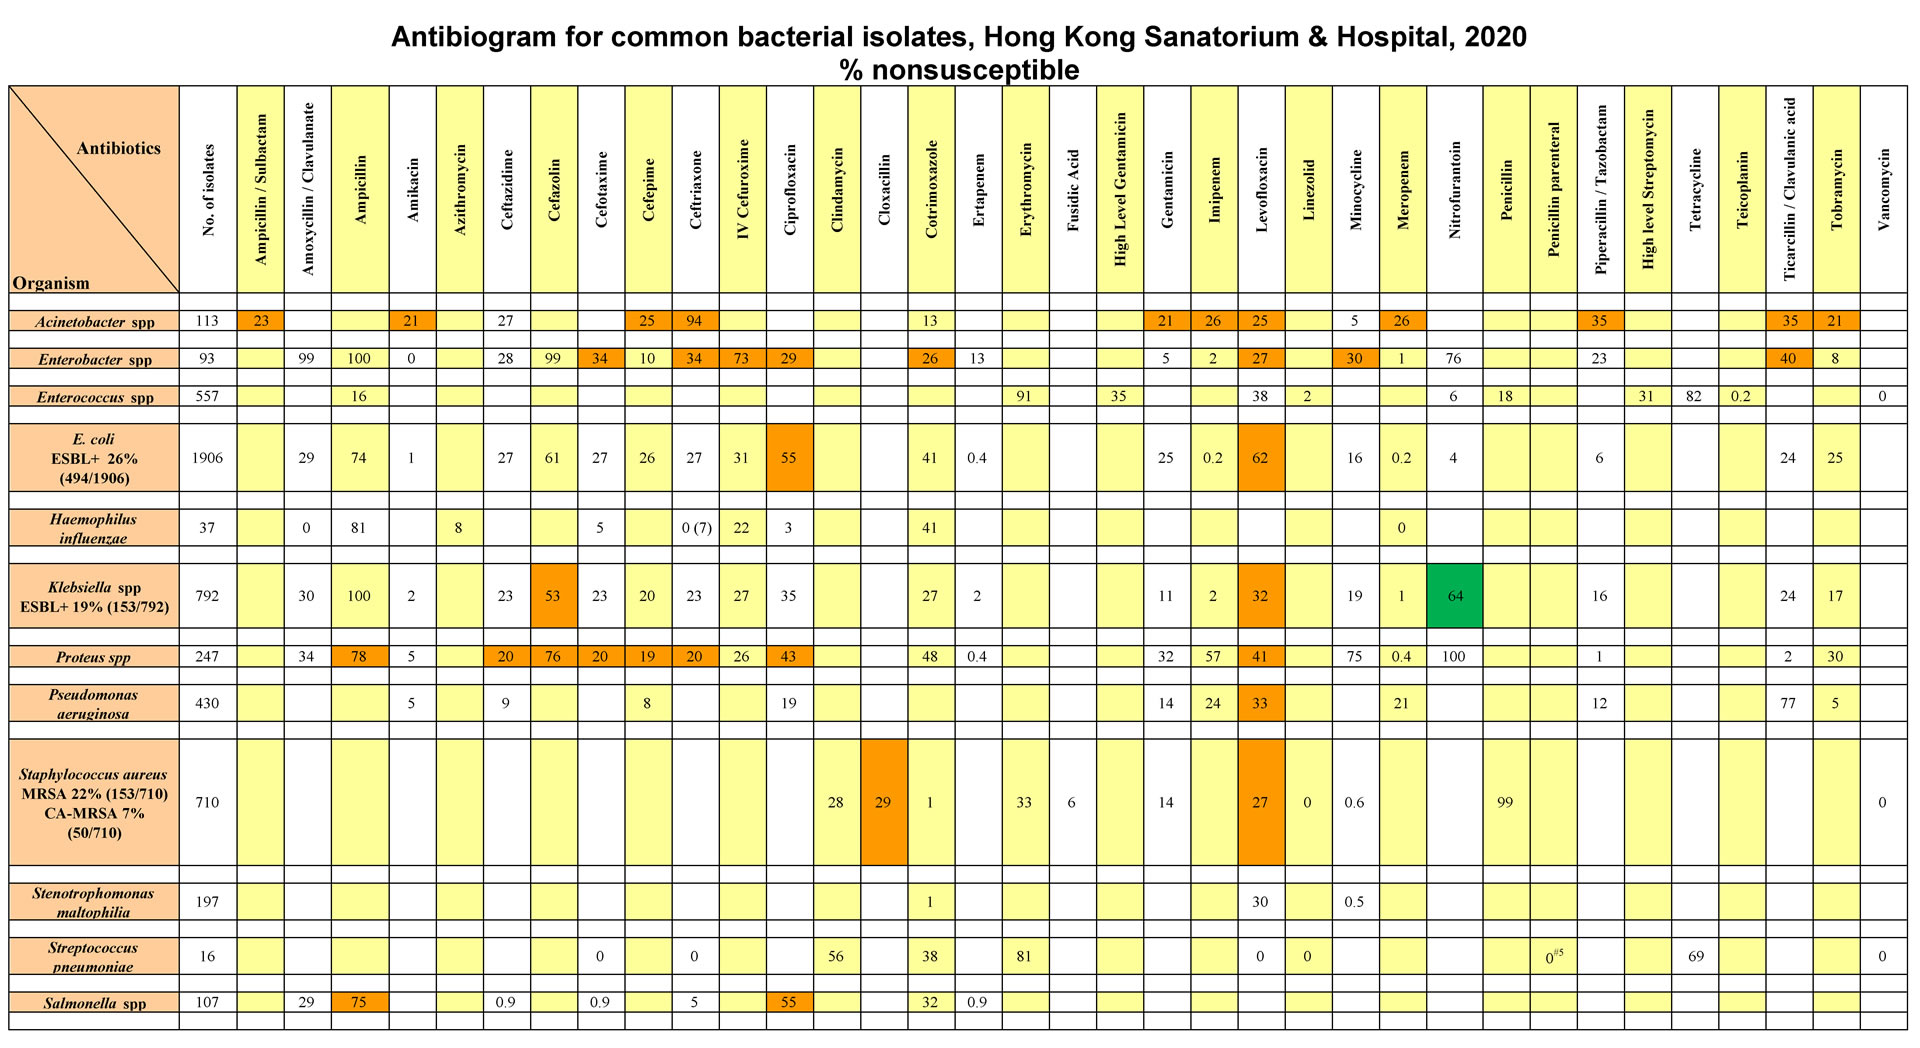 Table HKSH. Antibiogram for common bacterial isolates, Hong Kong Sanatorium & Hospital, 2020